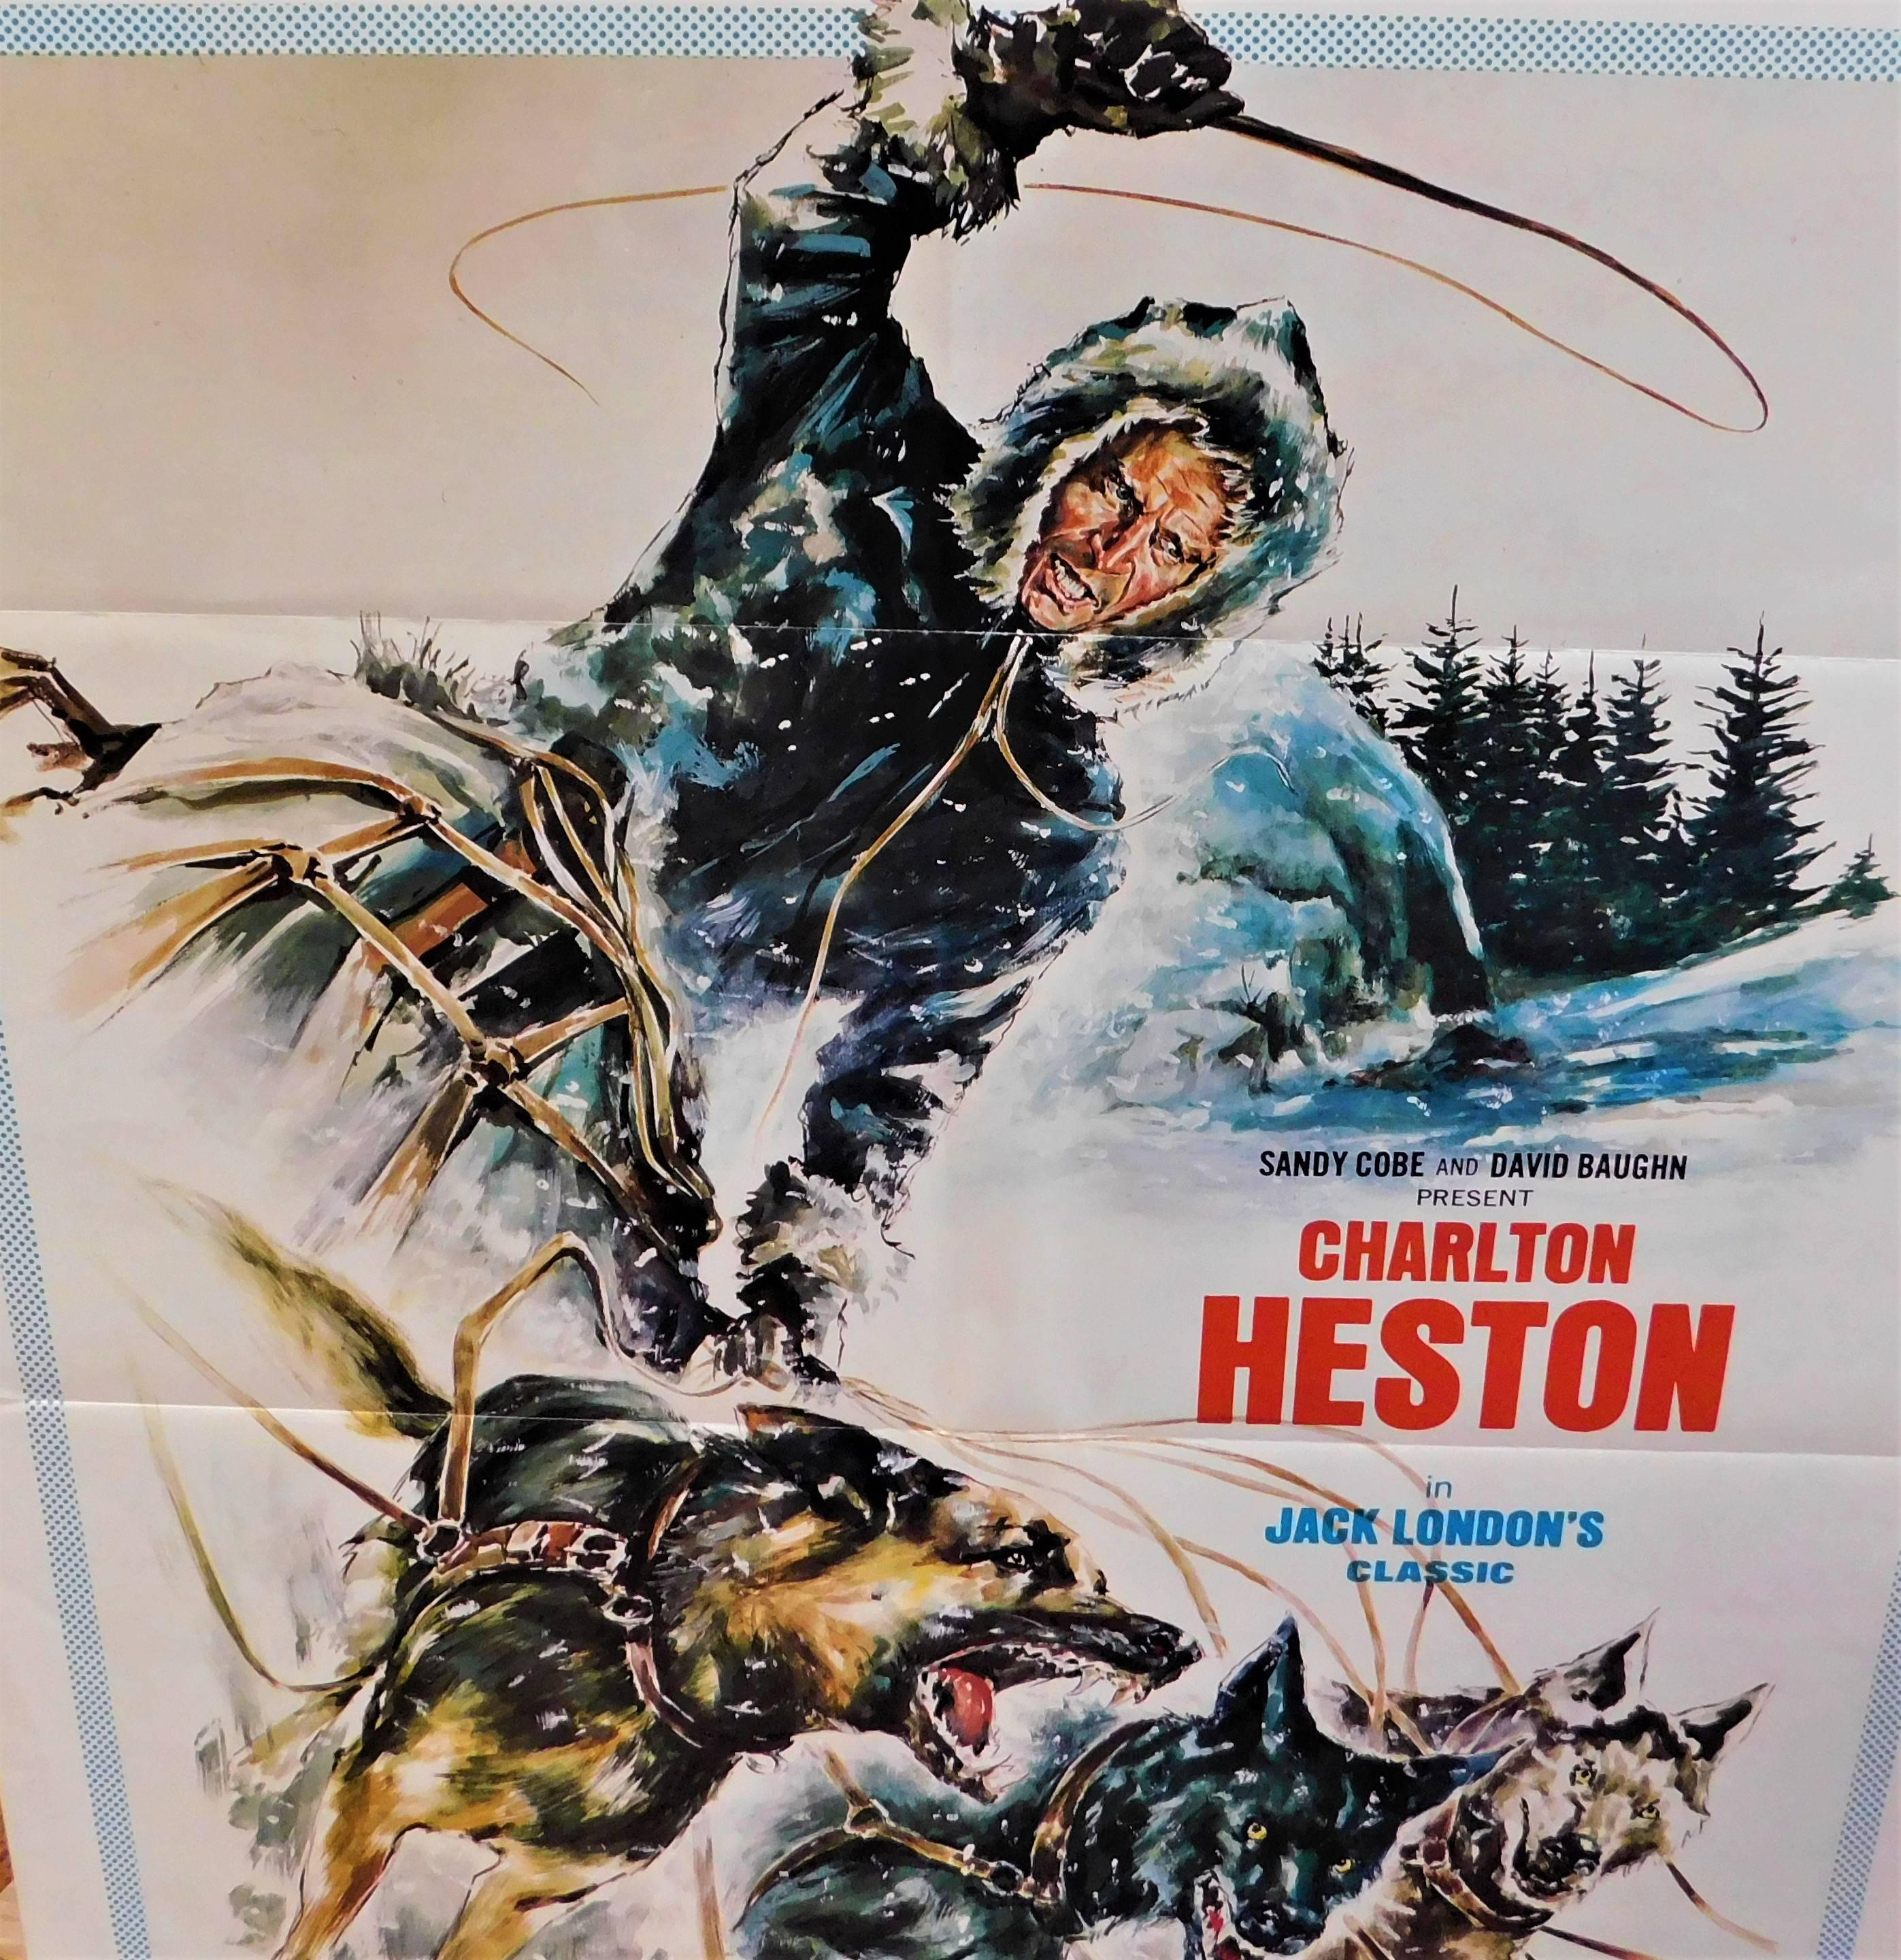 Original vintage movie poster 